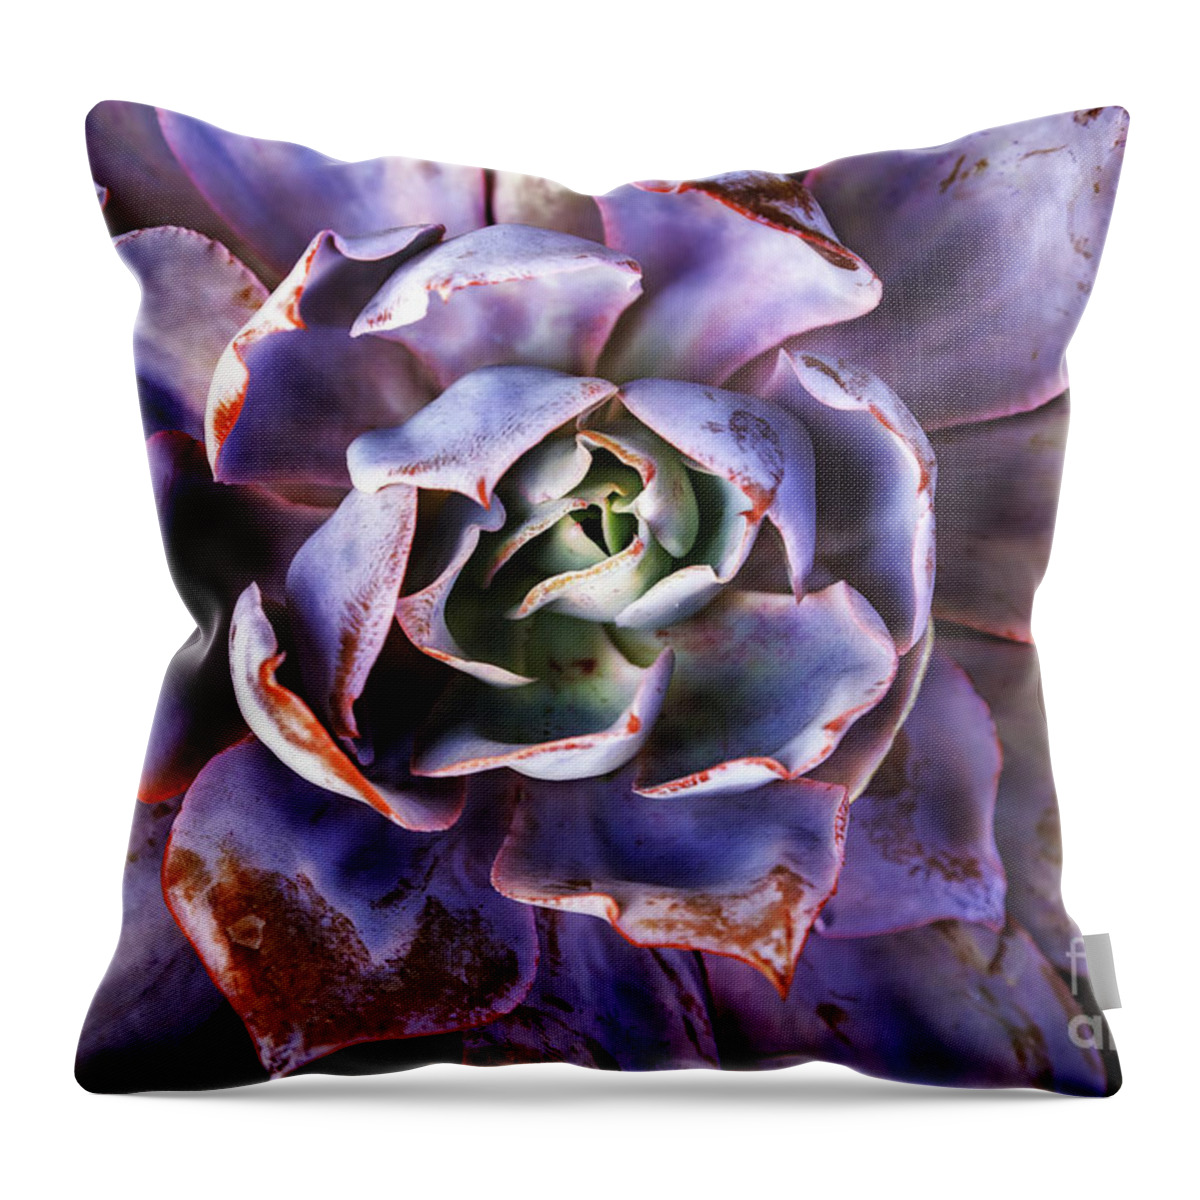 Landscape Throw Pillow featuring the photograph Purple Succulent by Craig J Satterlee